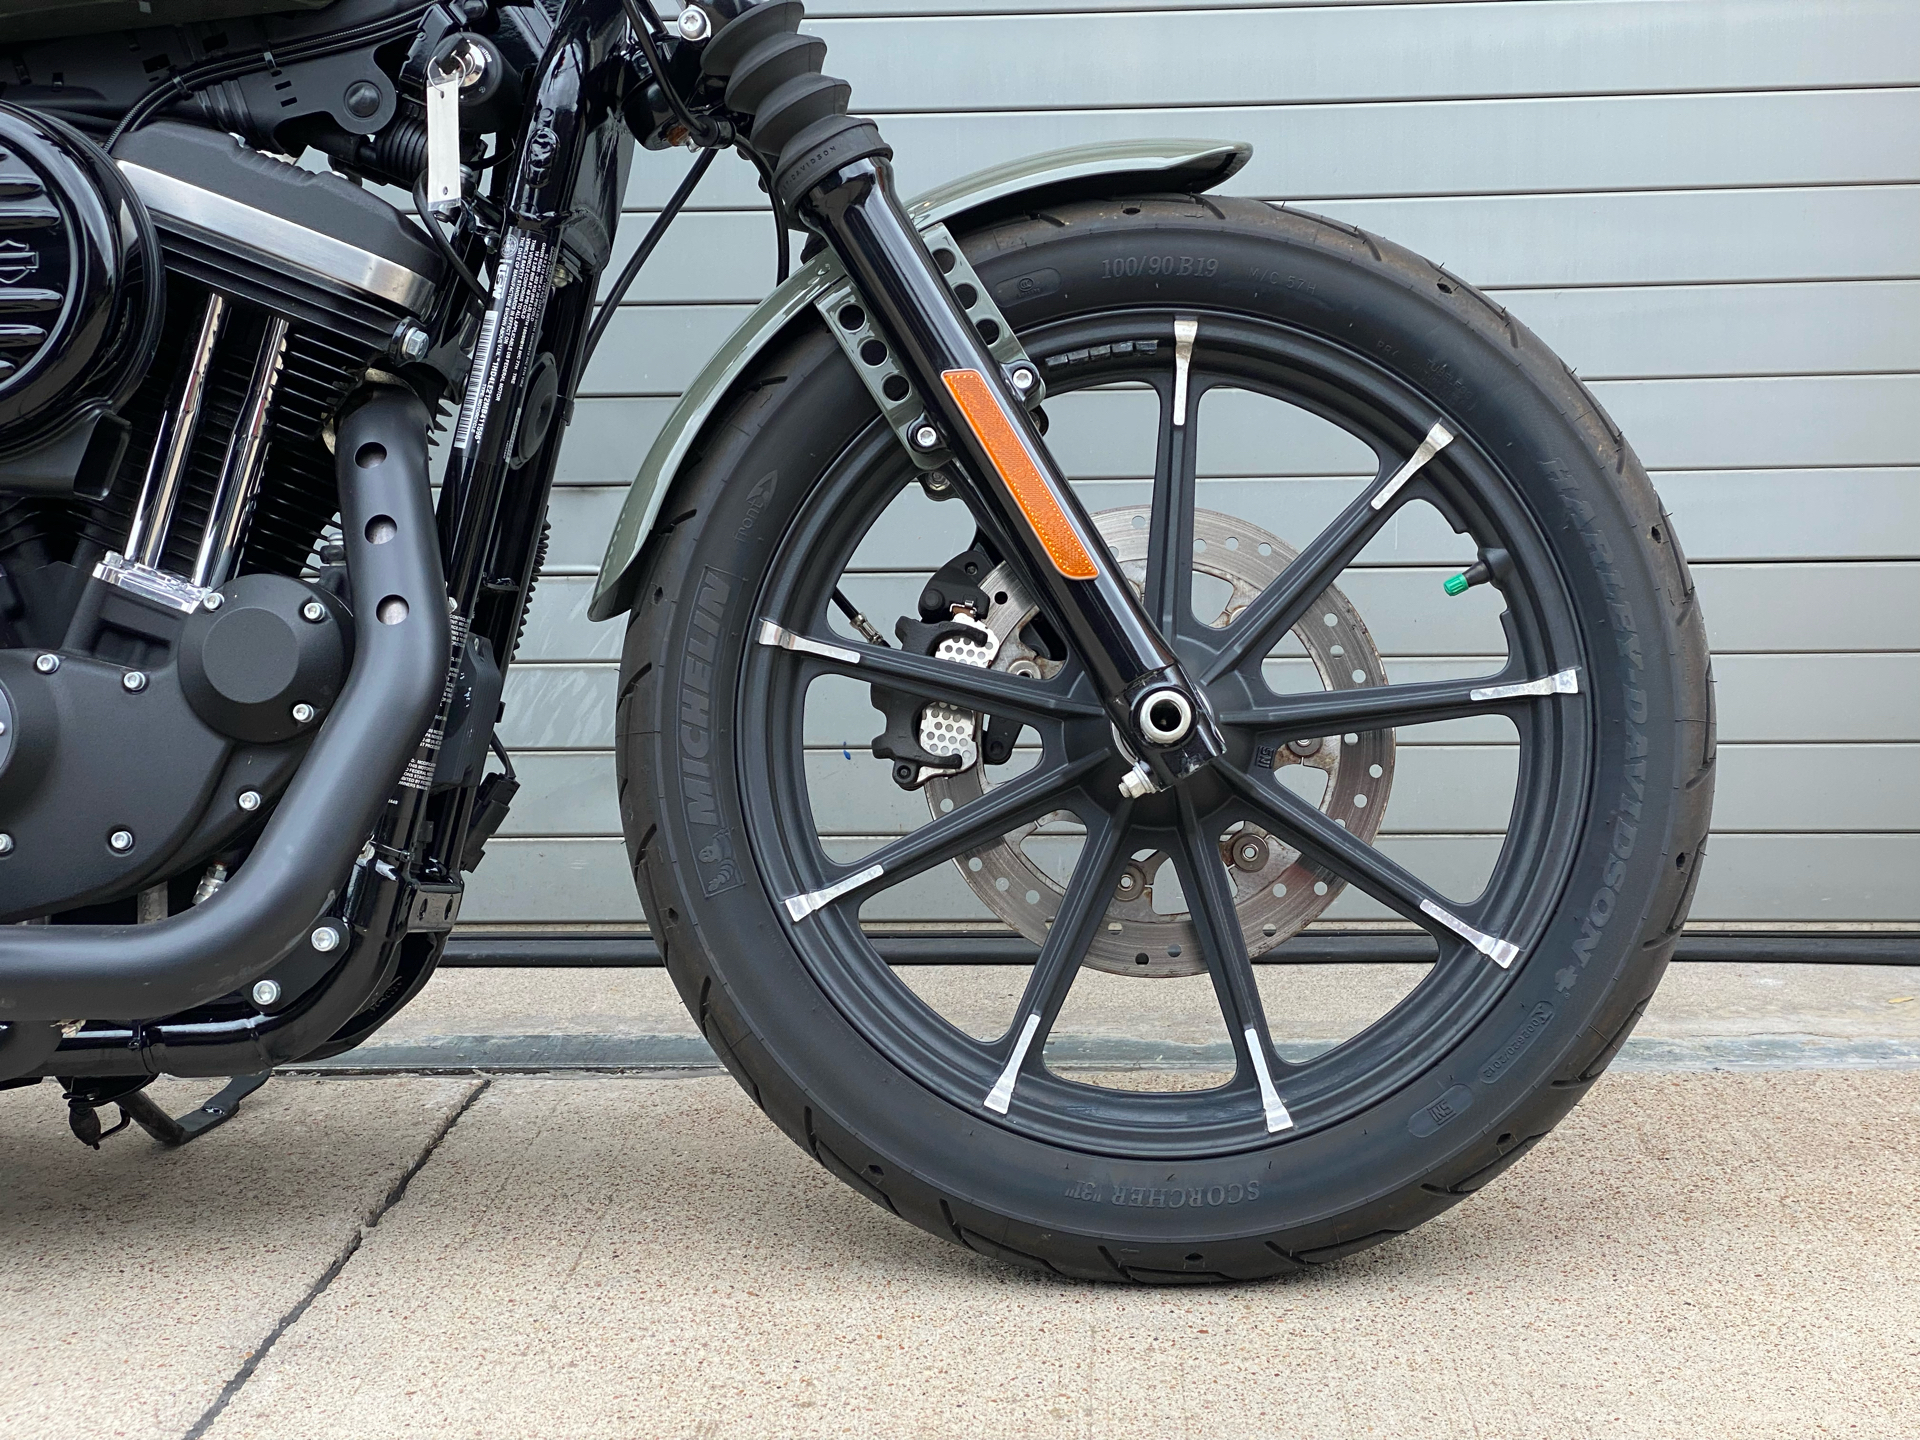 2021 Harley-Davidson Iron 883™ in Grand Prairie, Texas - Photo 4